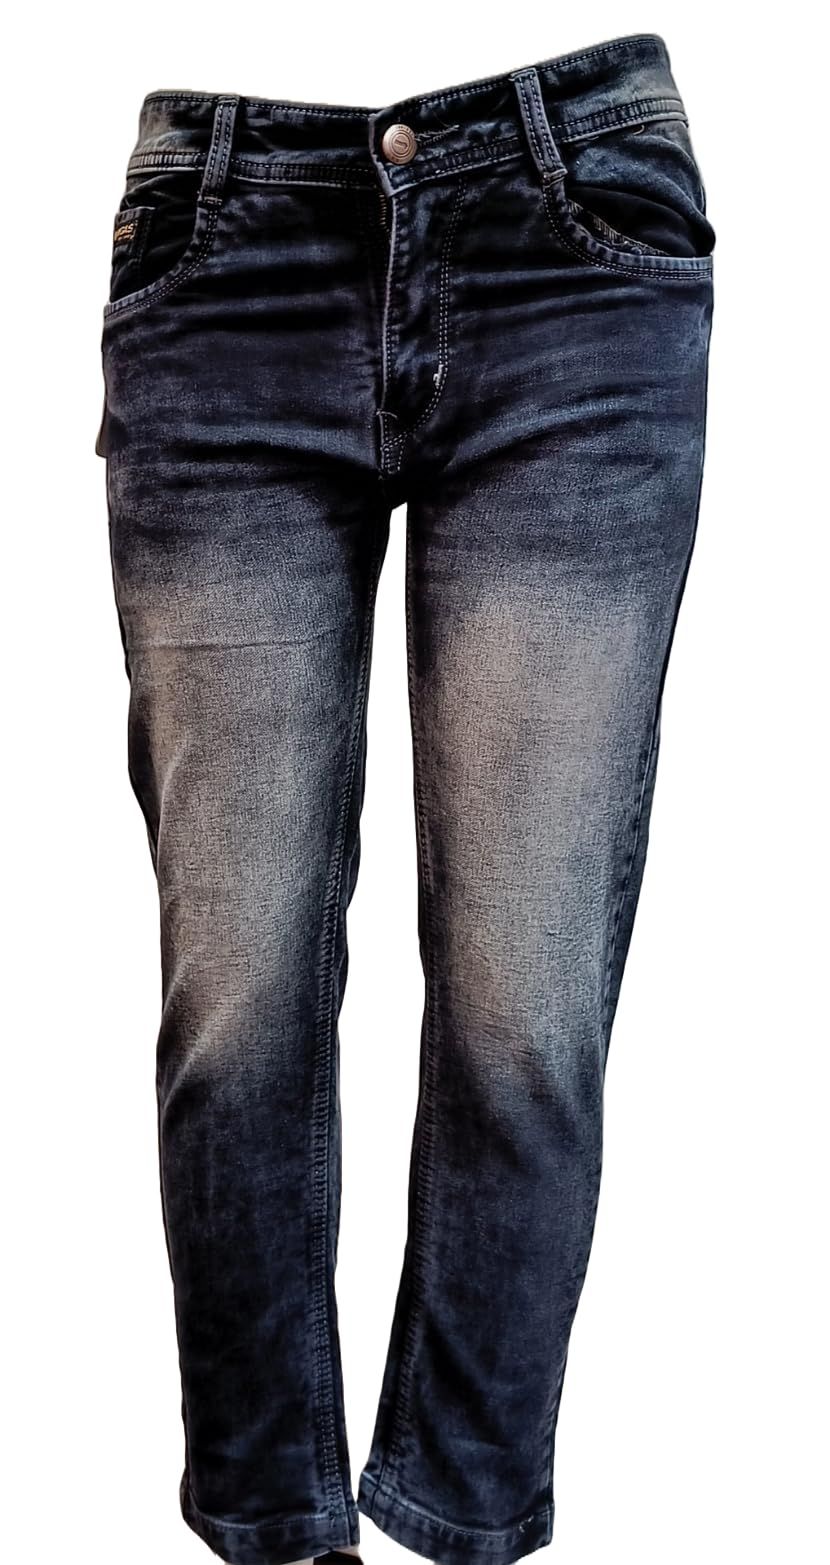 Jeans Ancle Length Mens Cotton by Cotton streachable Dark Blue